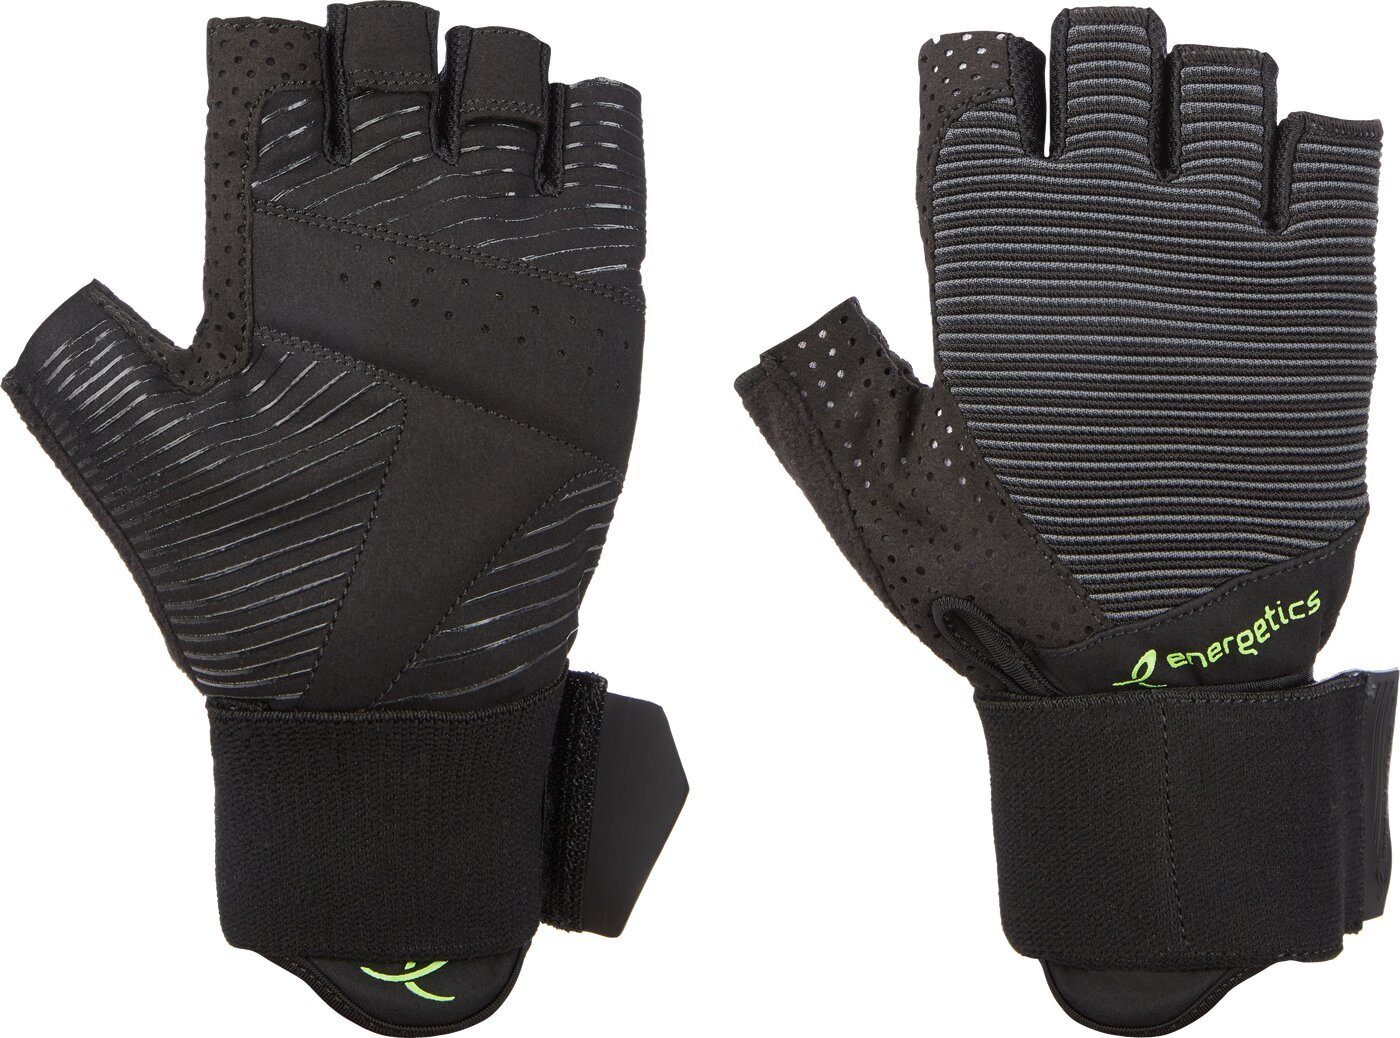 BLACK/YELLOW Energetics MFG550 Gewichtshandschuhe Handschuh